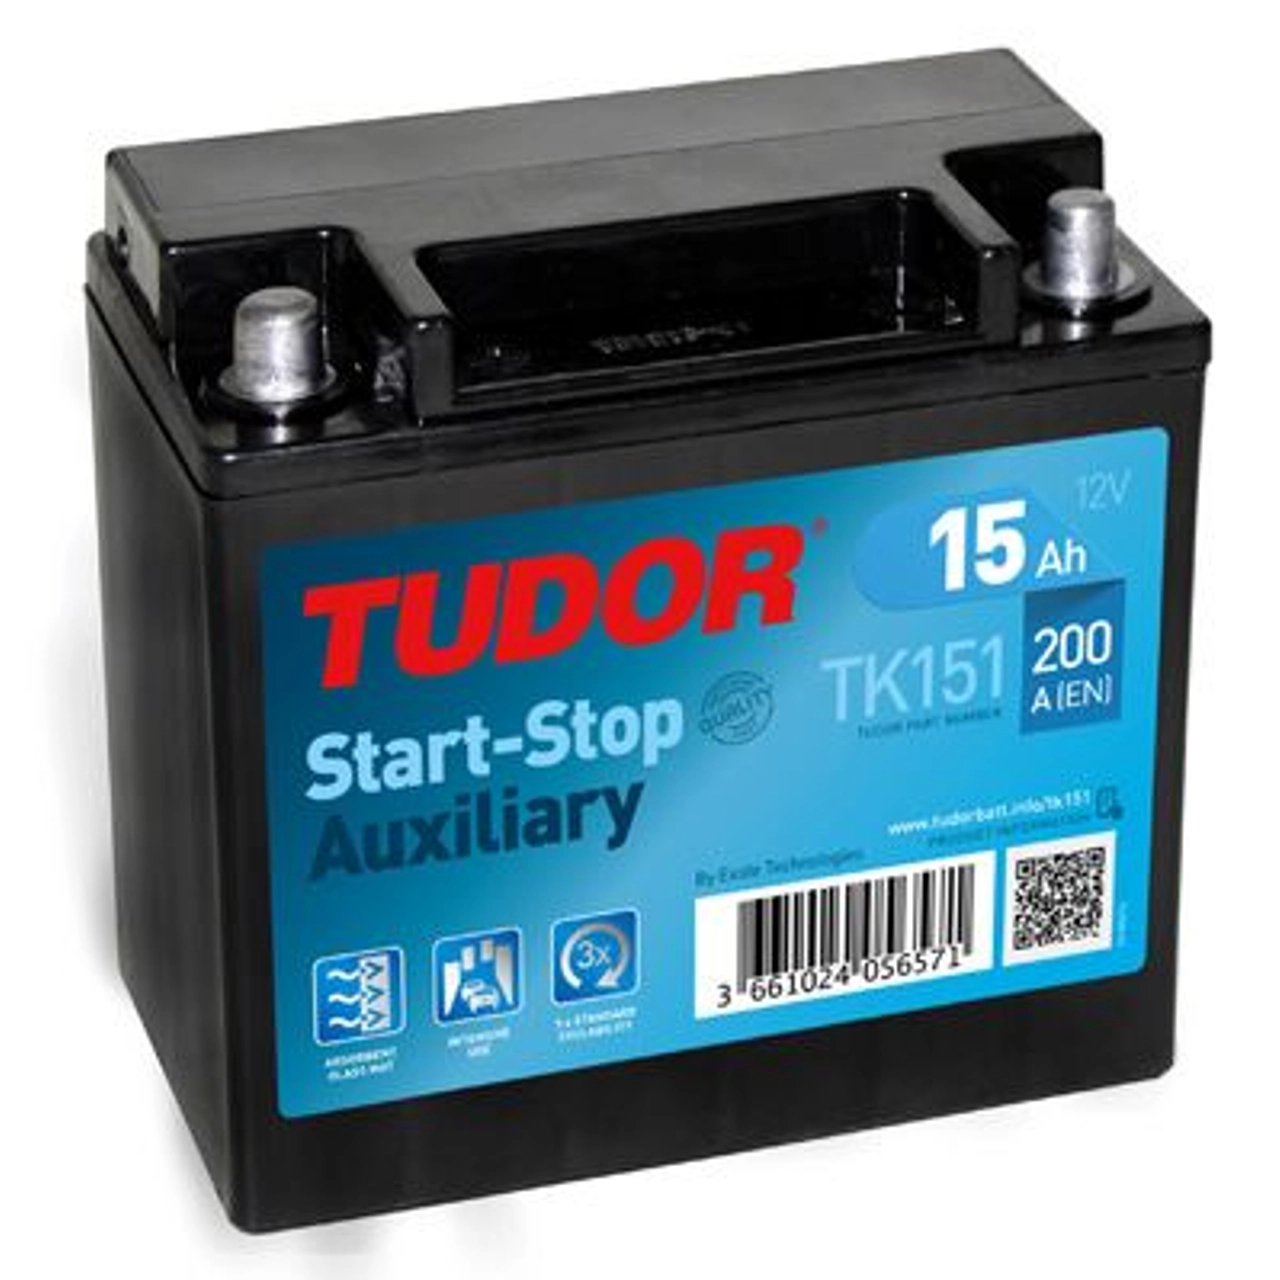 Batería Tudor Start-Stop EFB TL604 12V - 60Ah - 520A